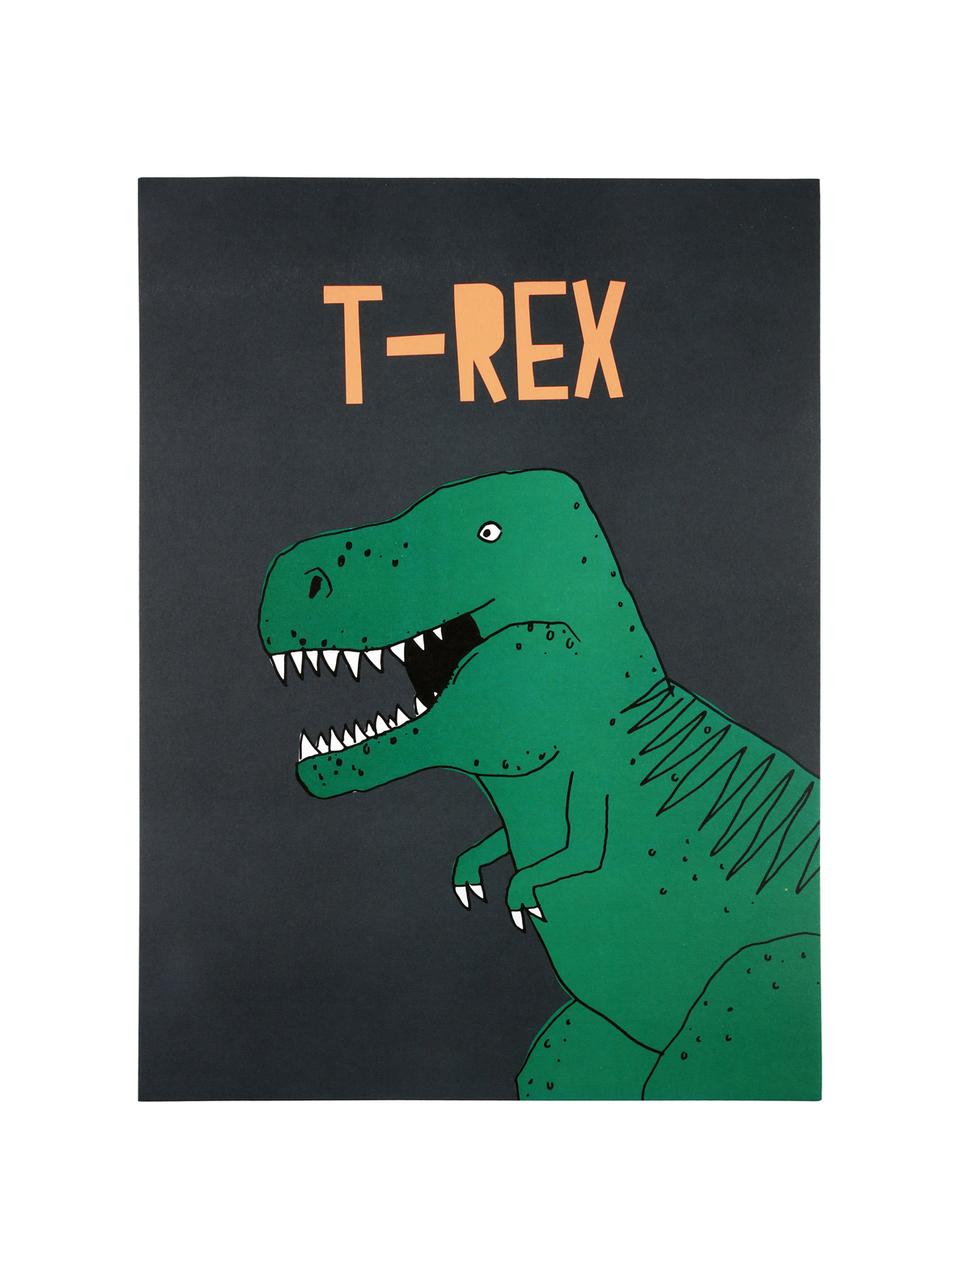 Set de posters Dinosaur, 2 pzas., Impresión digital sobre papel, 200 g/m², Beige claro, naranja, azul, rojo, amarillo, An 31 x Al 41 cm